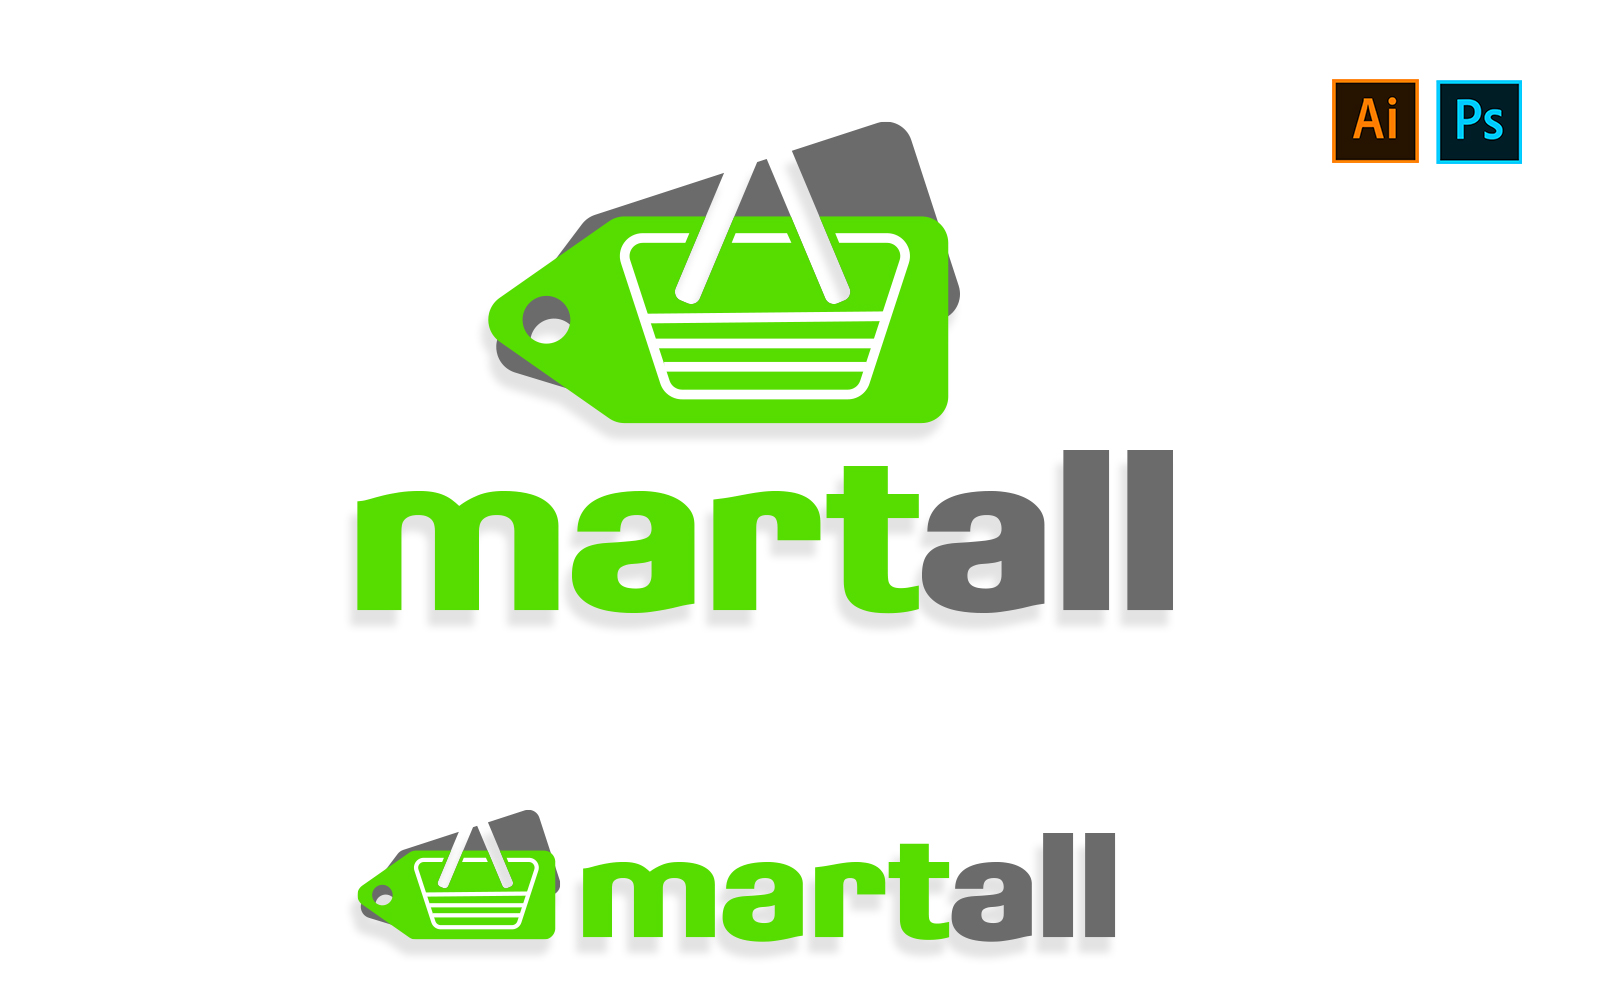 Mini Mart - Online Store